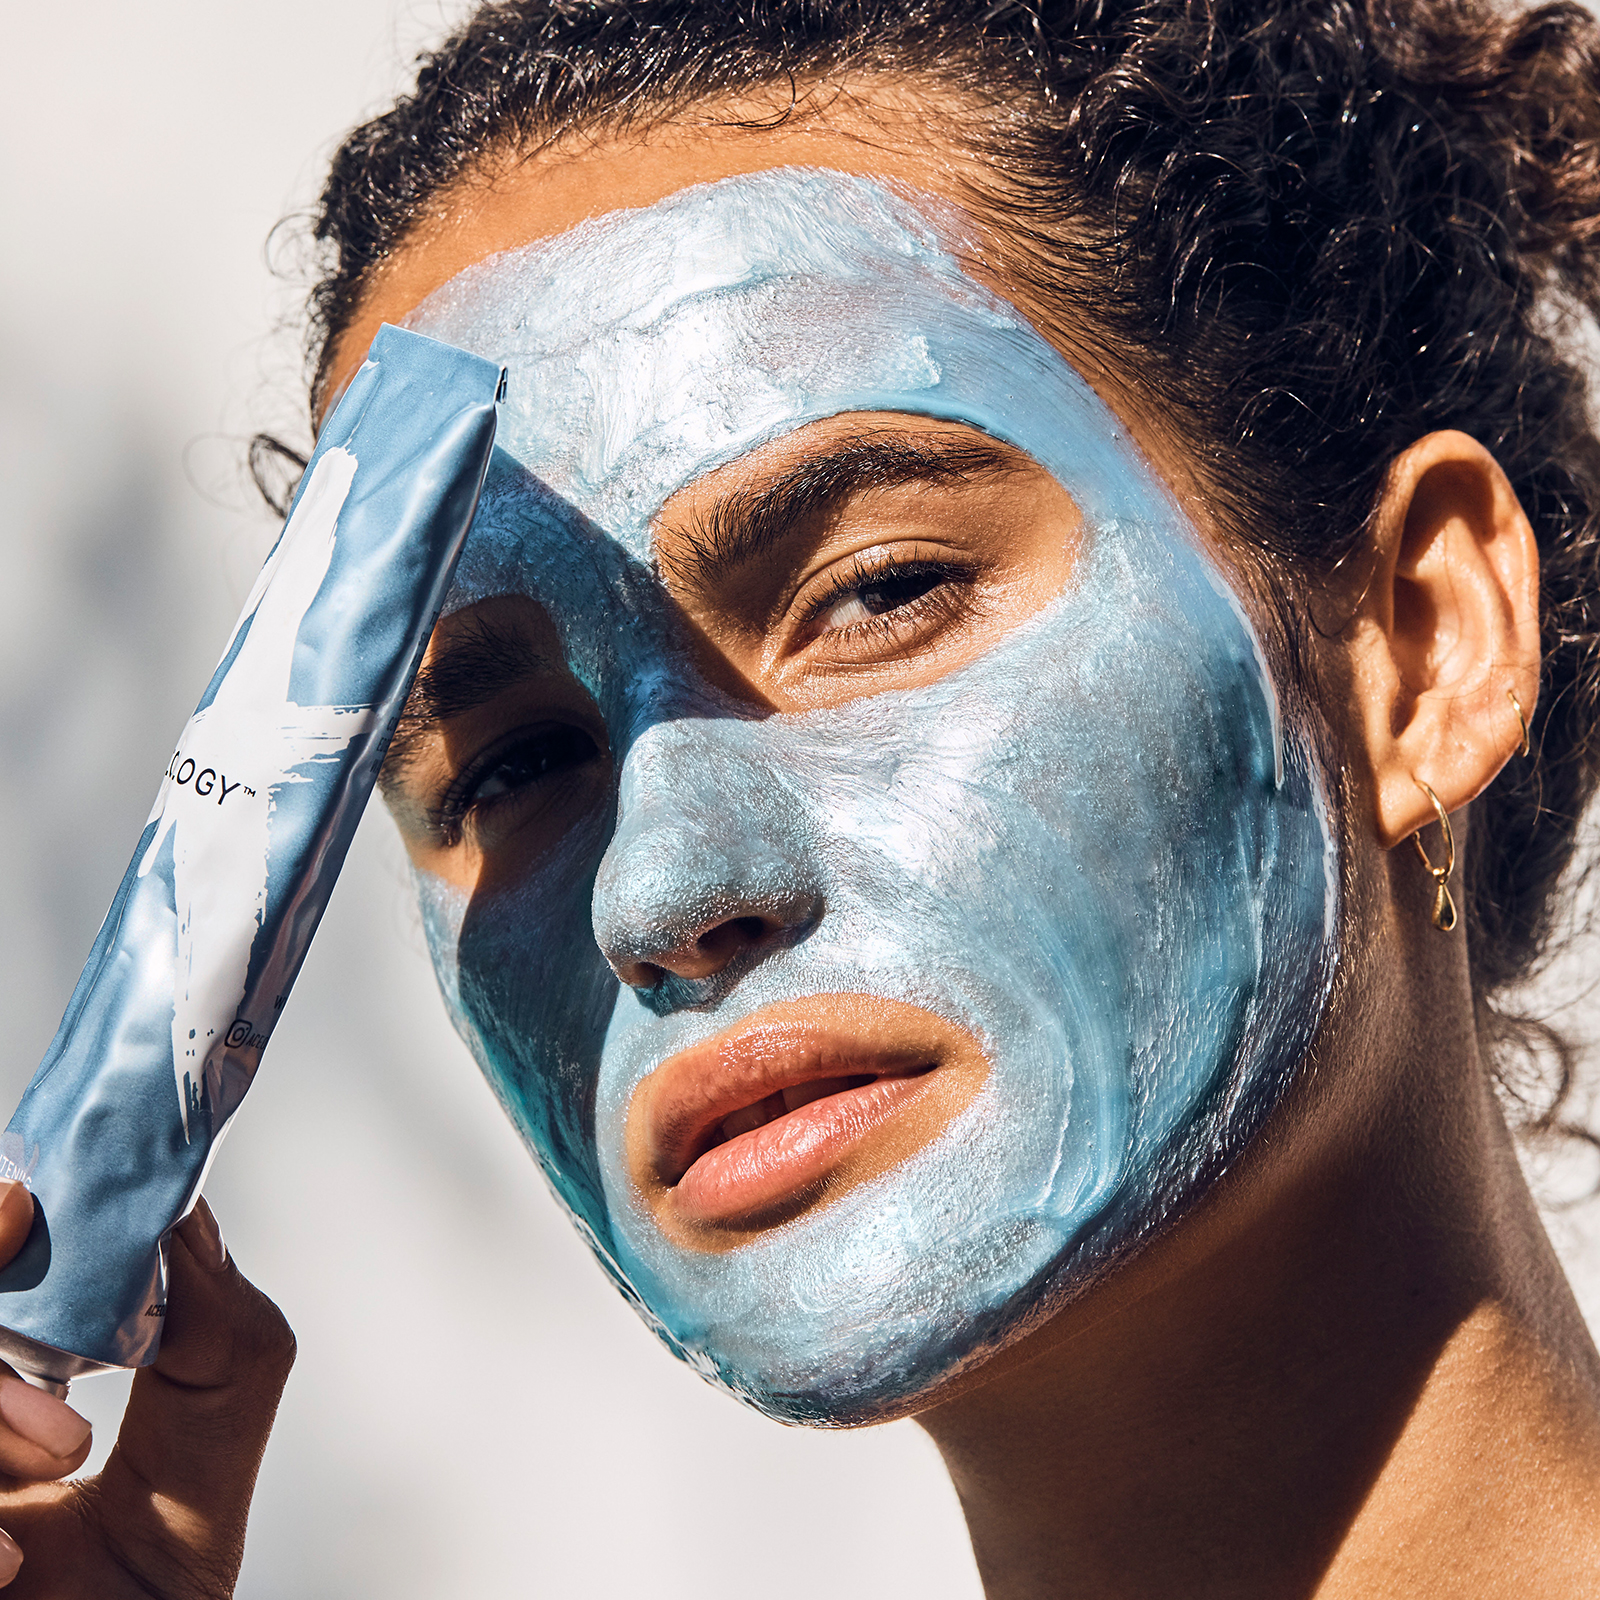 Fallachi beauty – 2022 – Aceology – Brightening Treatment Mask